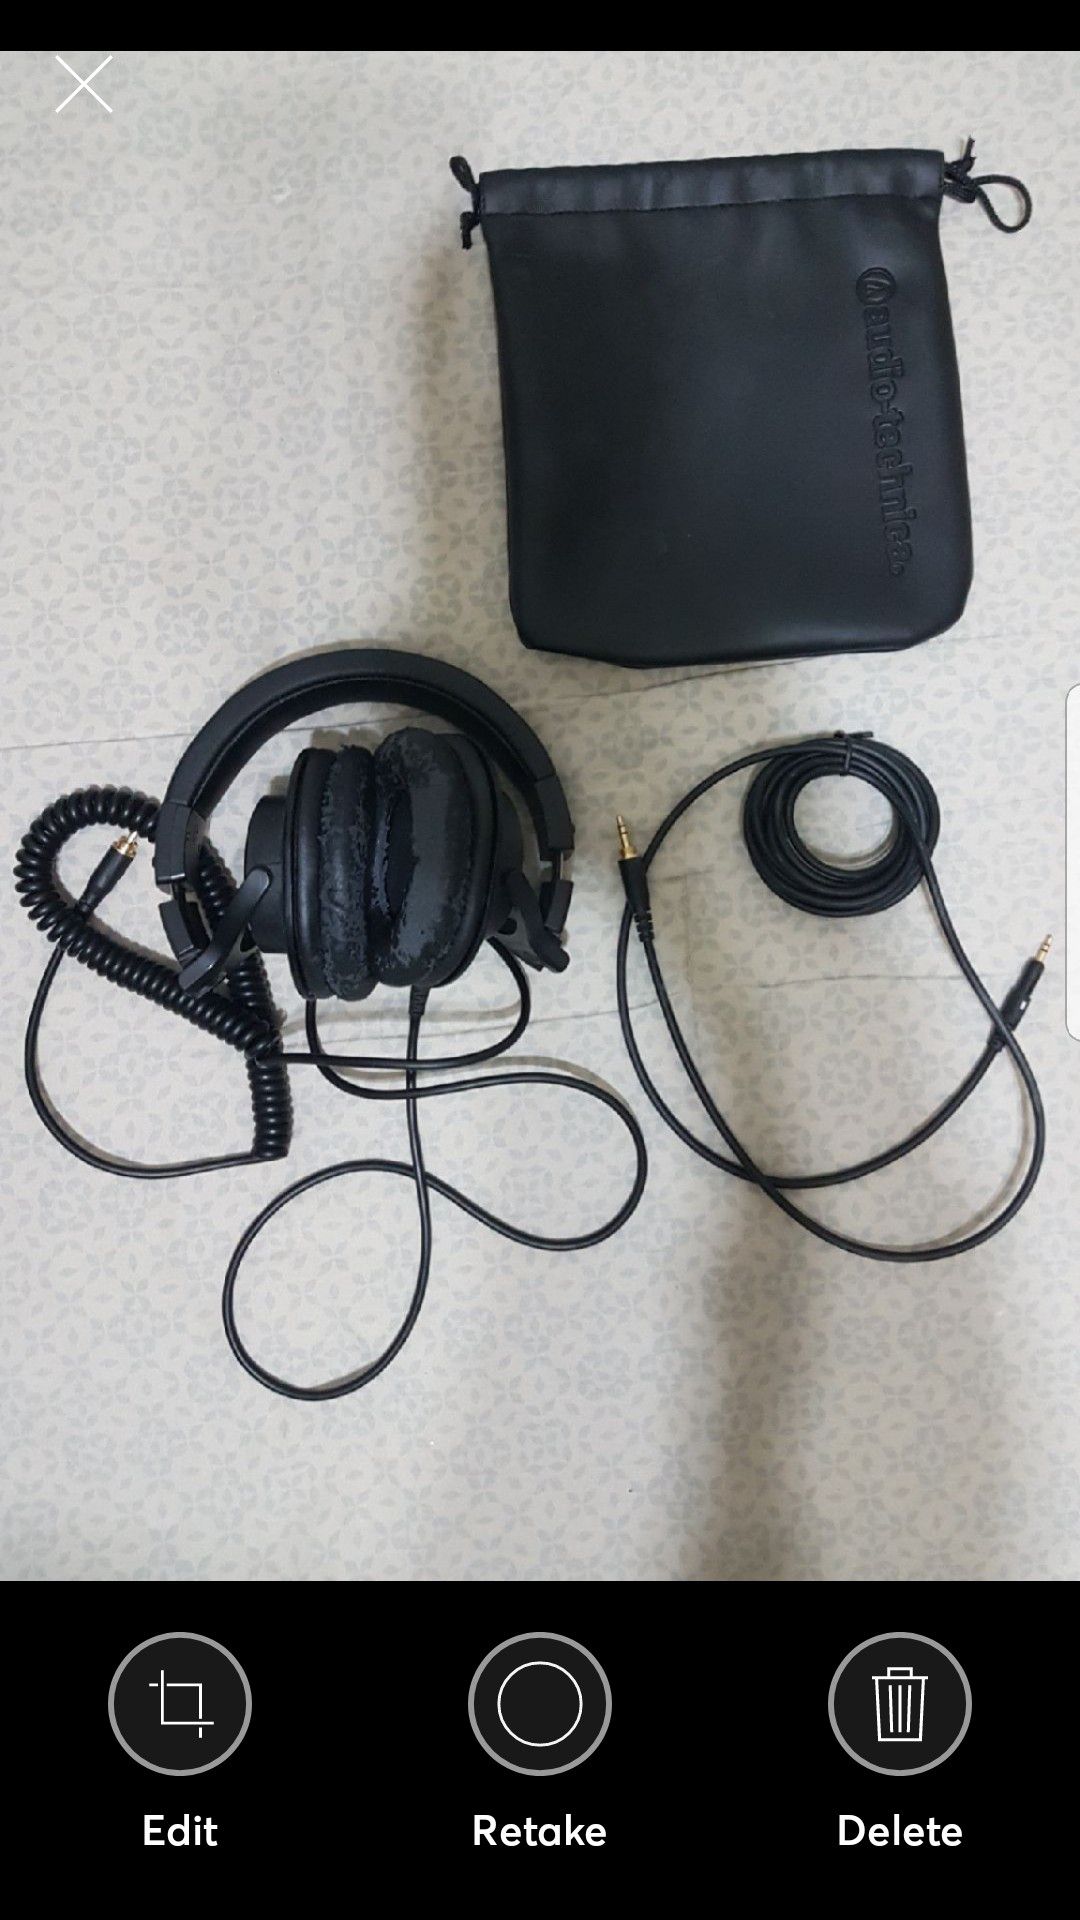 Audio Technica ATH-M40x headphones